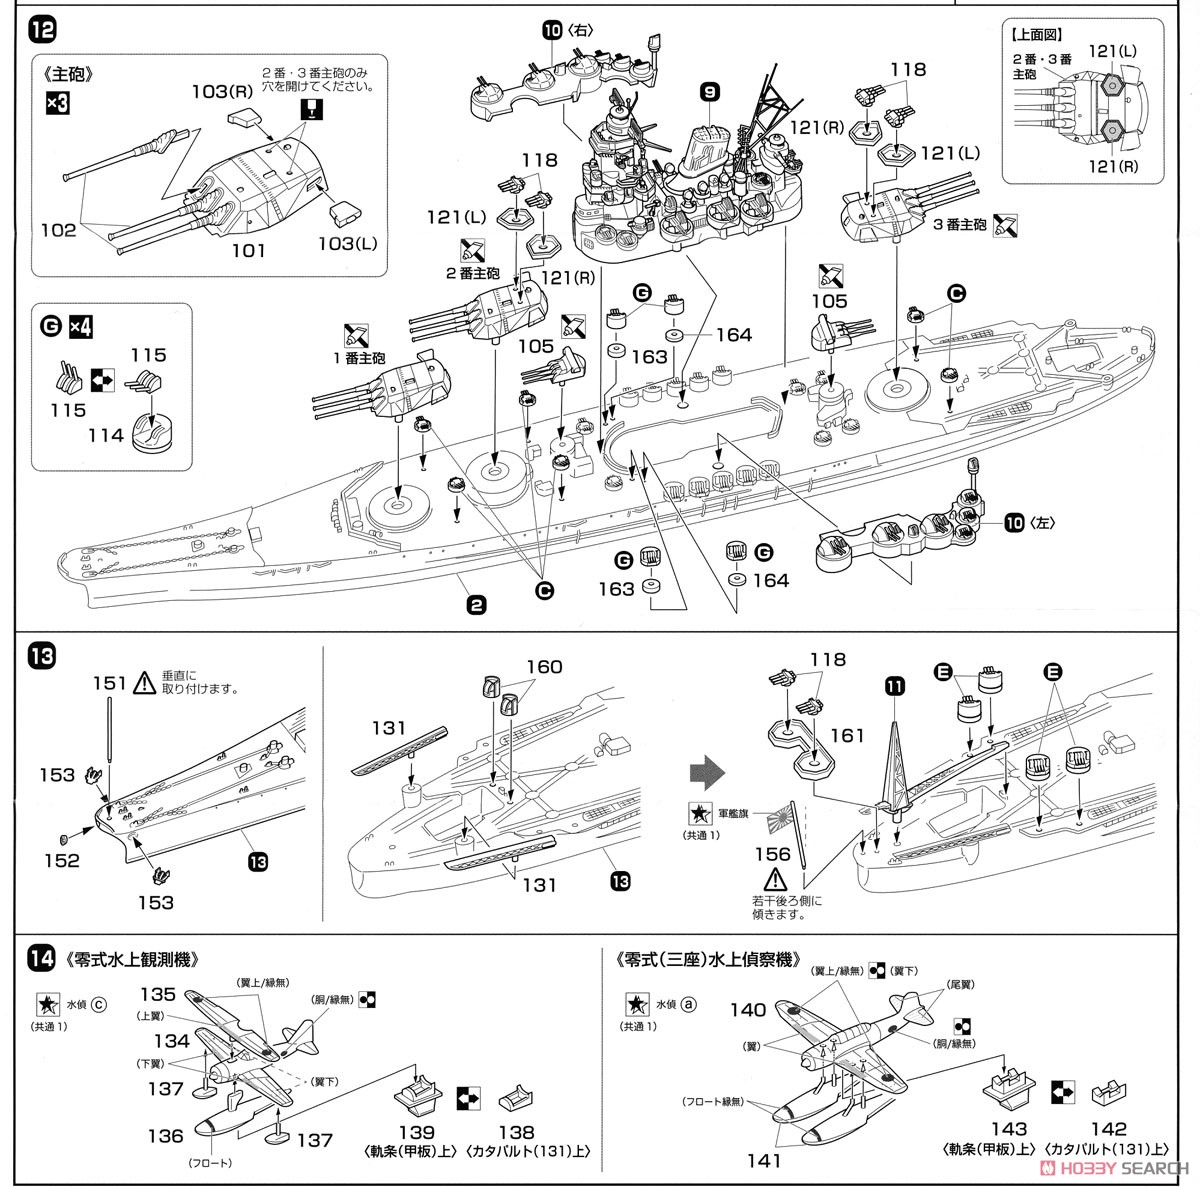 日本海軍戦艦 大和 (昭和20年/天一号作戦) (プラモデル) 設計図4